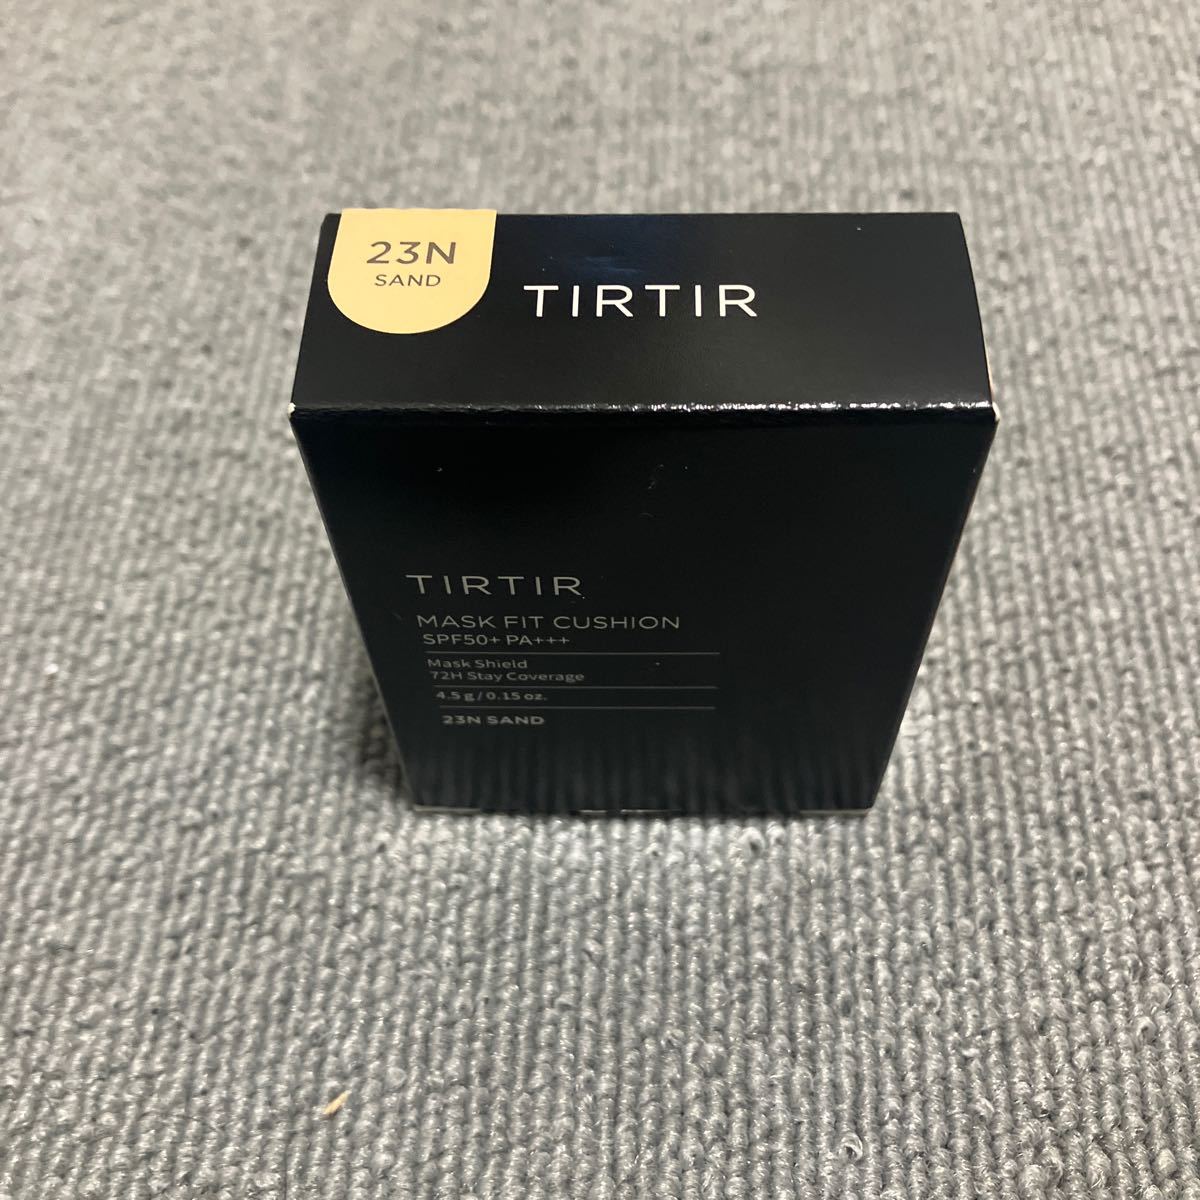 TIRTIR Mask fit mini Cushion [ティルティル] マスクフィットミニクッション 本体 4.5g MASK FIT 23N SAND韓国コスメSPF50+PA+++_画像3